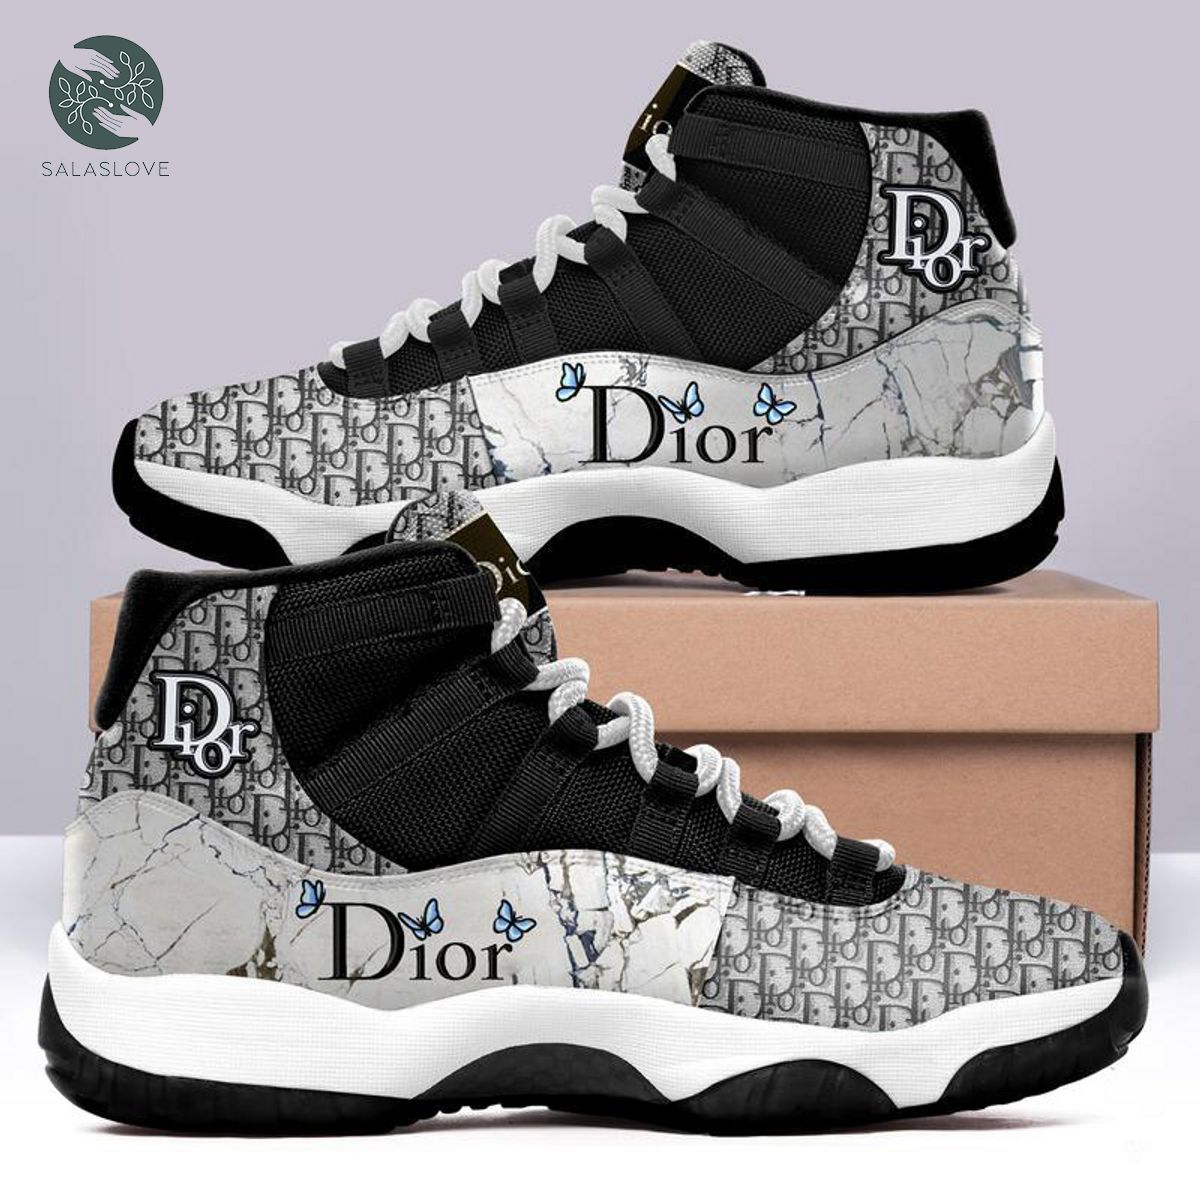 Dior Luxury Air Jordan 11 Shoes For Men And Women

